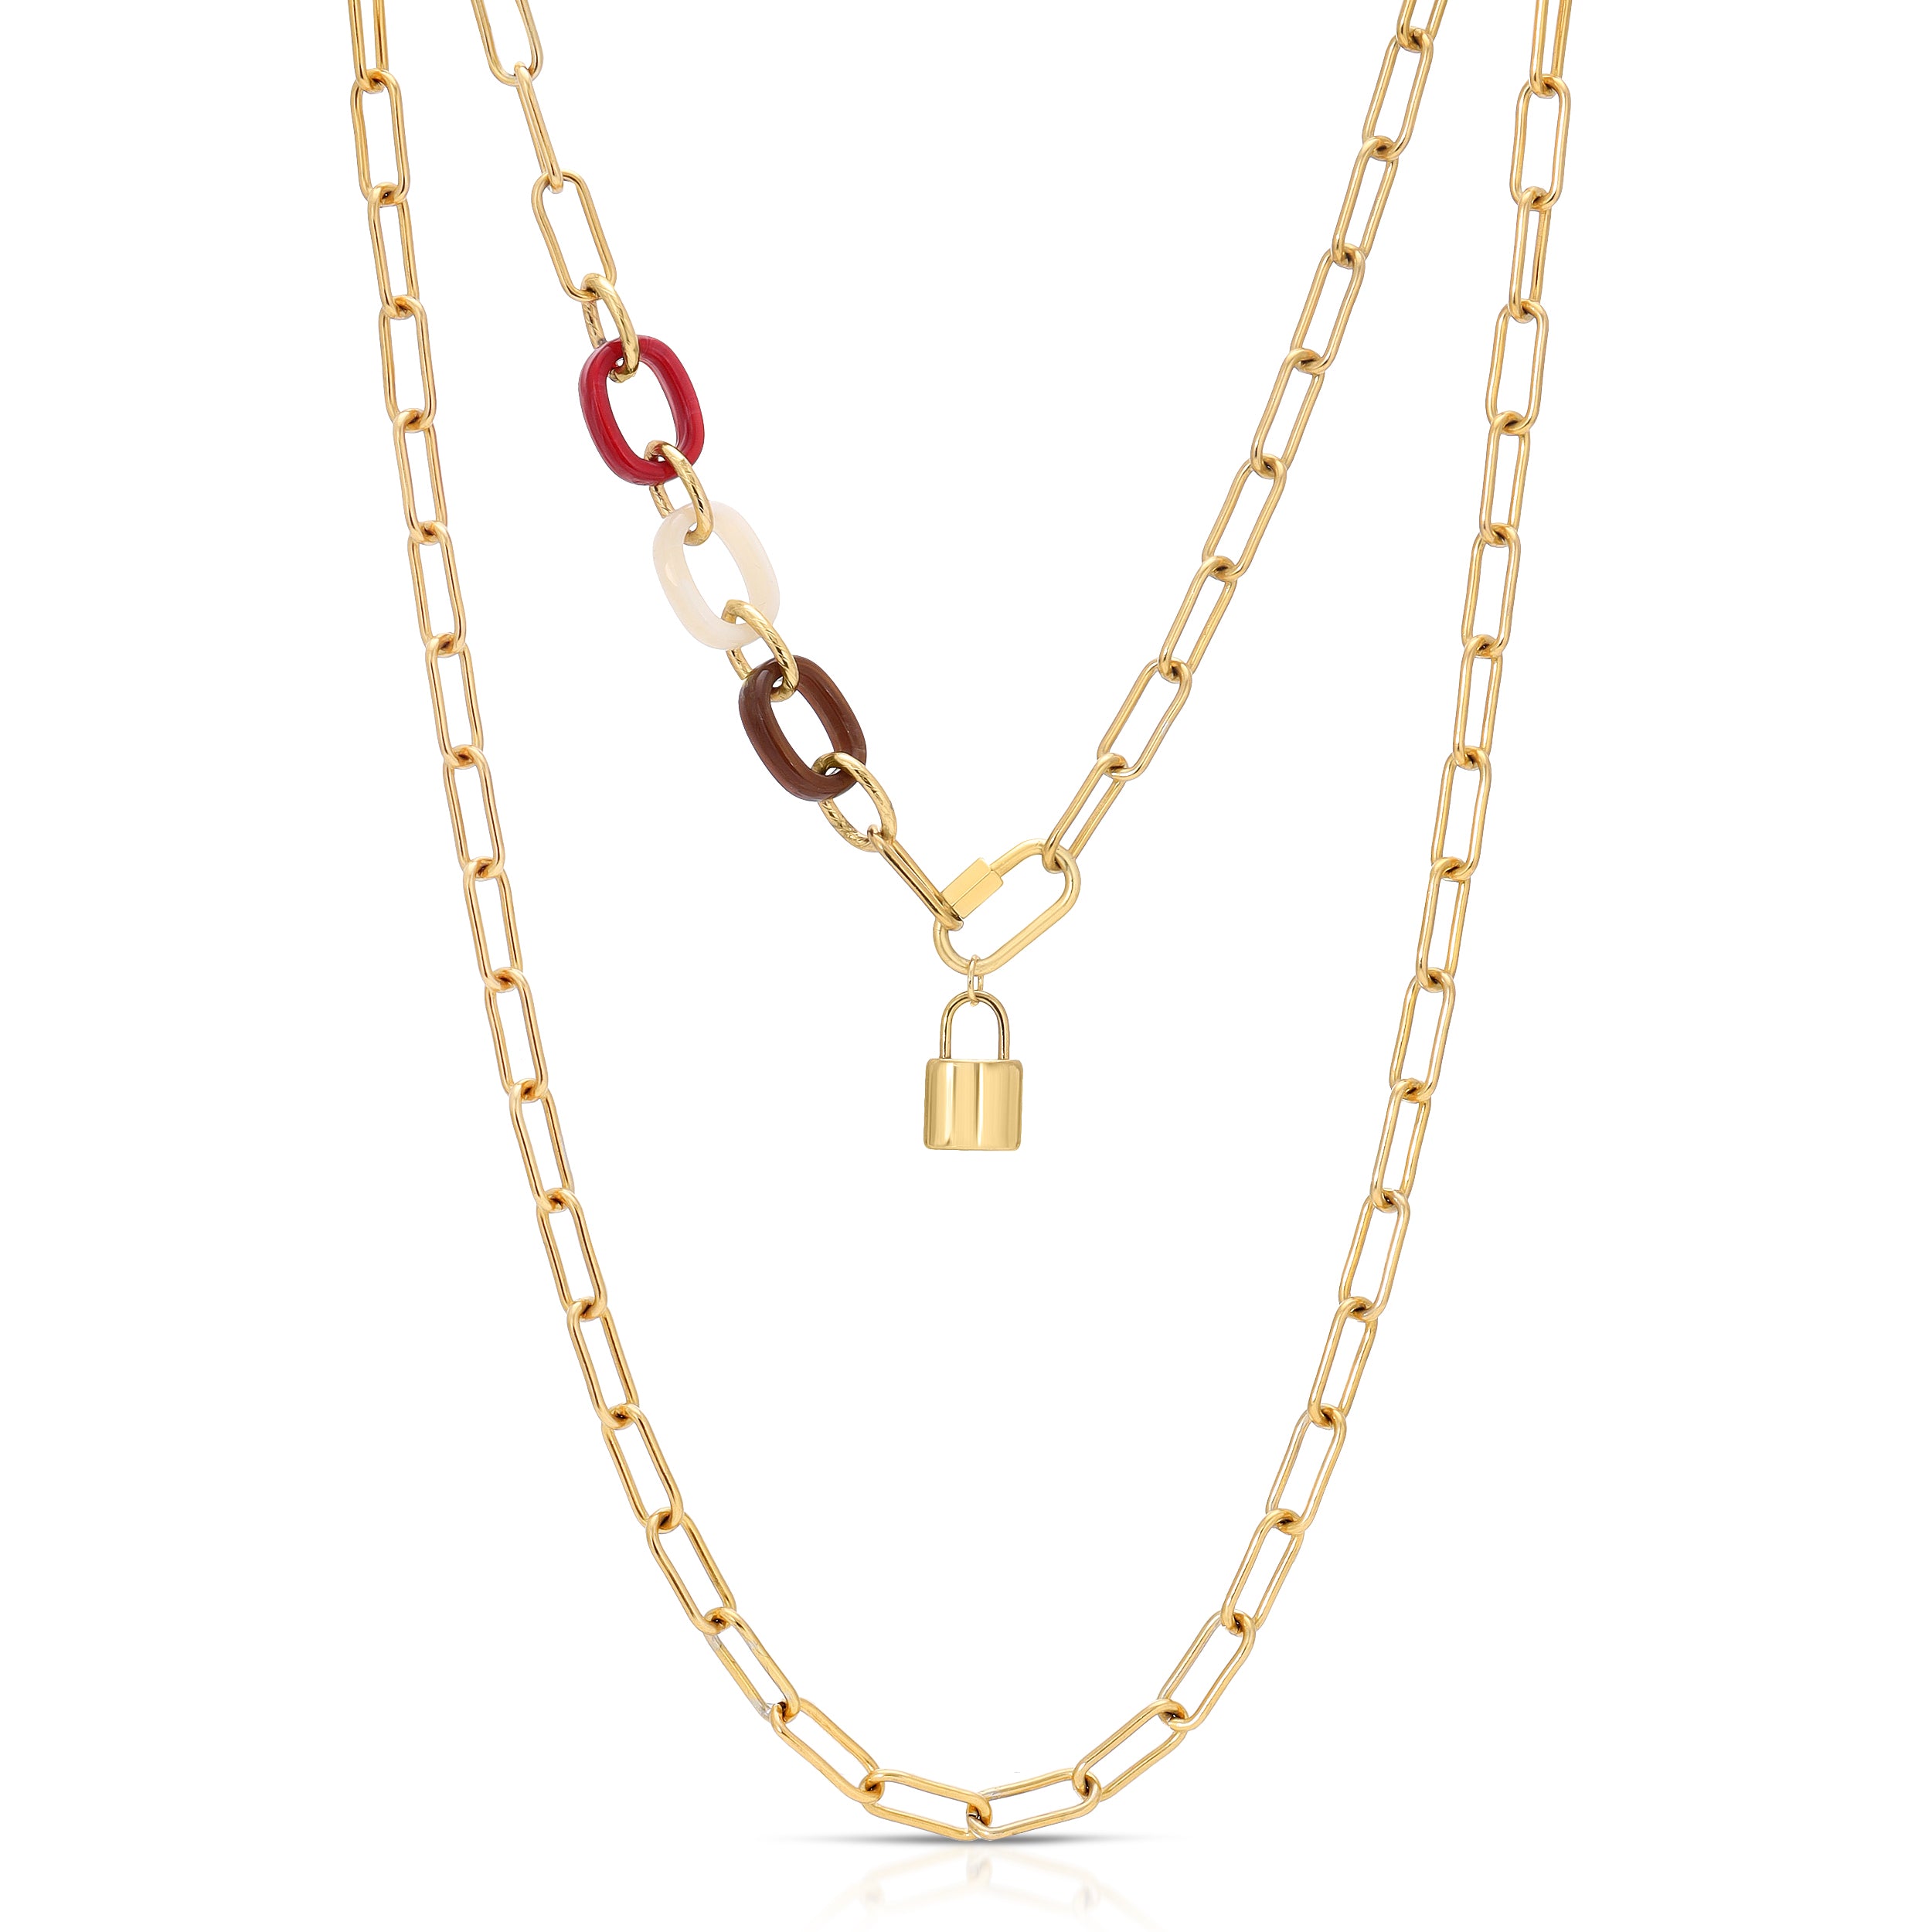 Chain Reaction Vivid Gold Necklace  | Chain Necklace Women | Chain Reaction Necklace - JaJaara